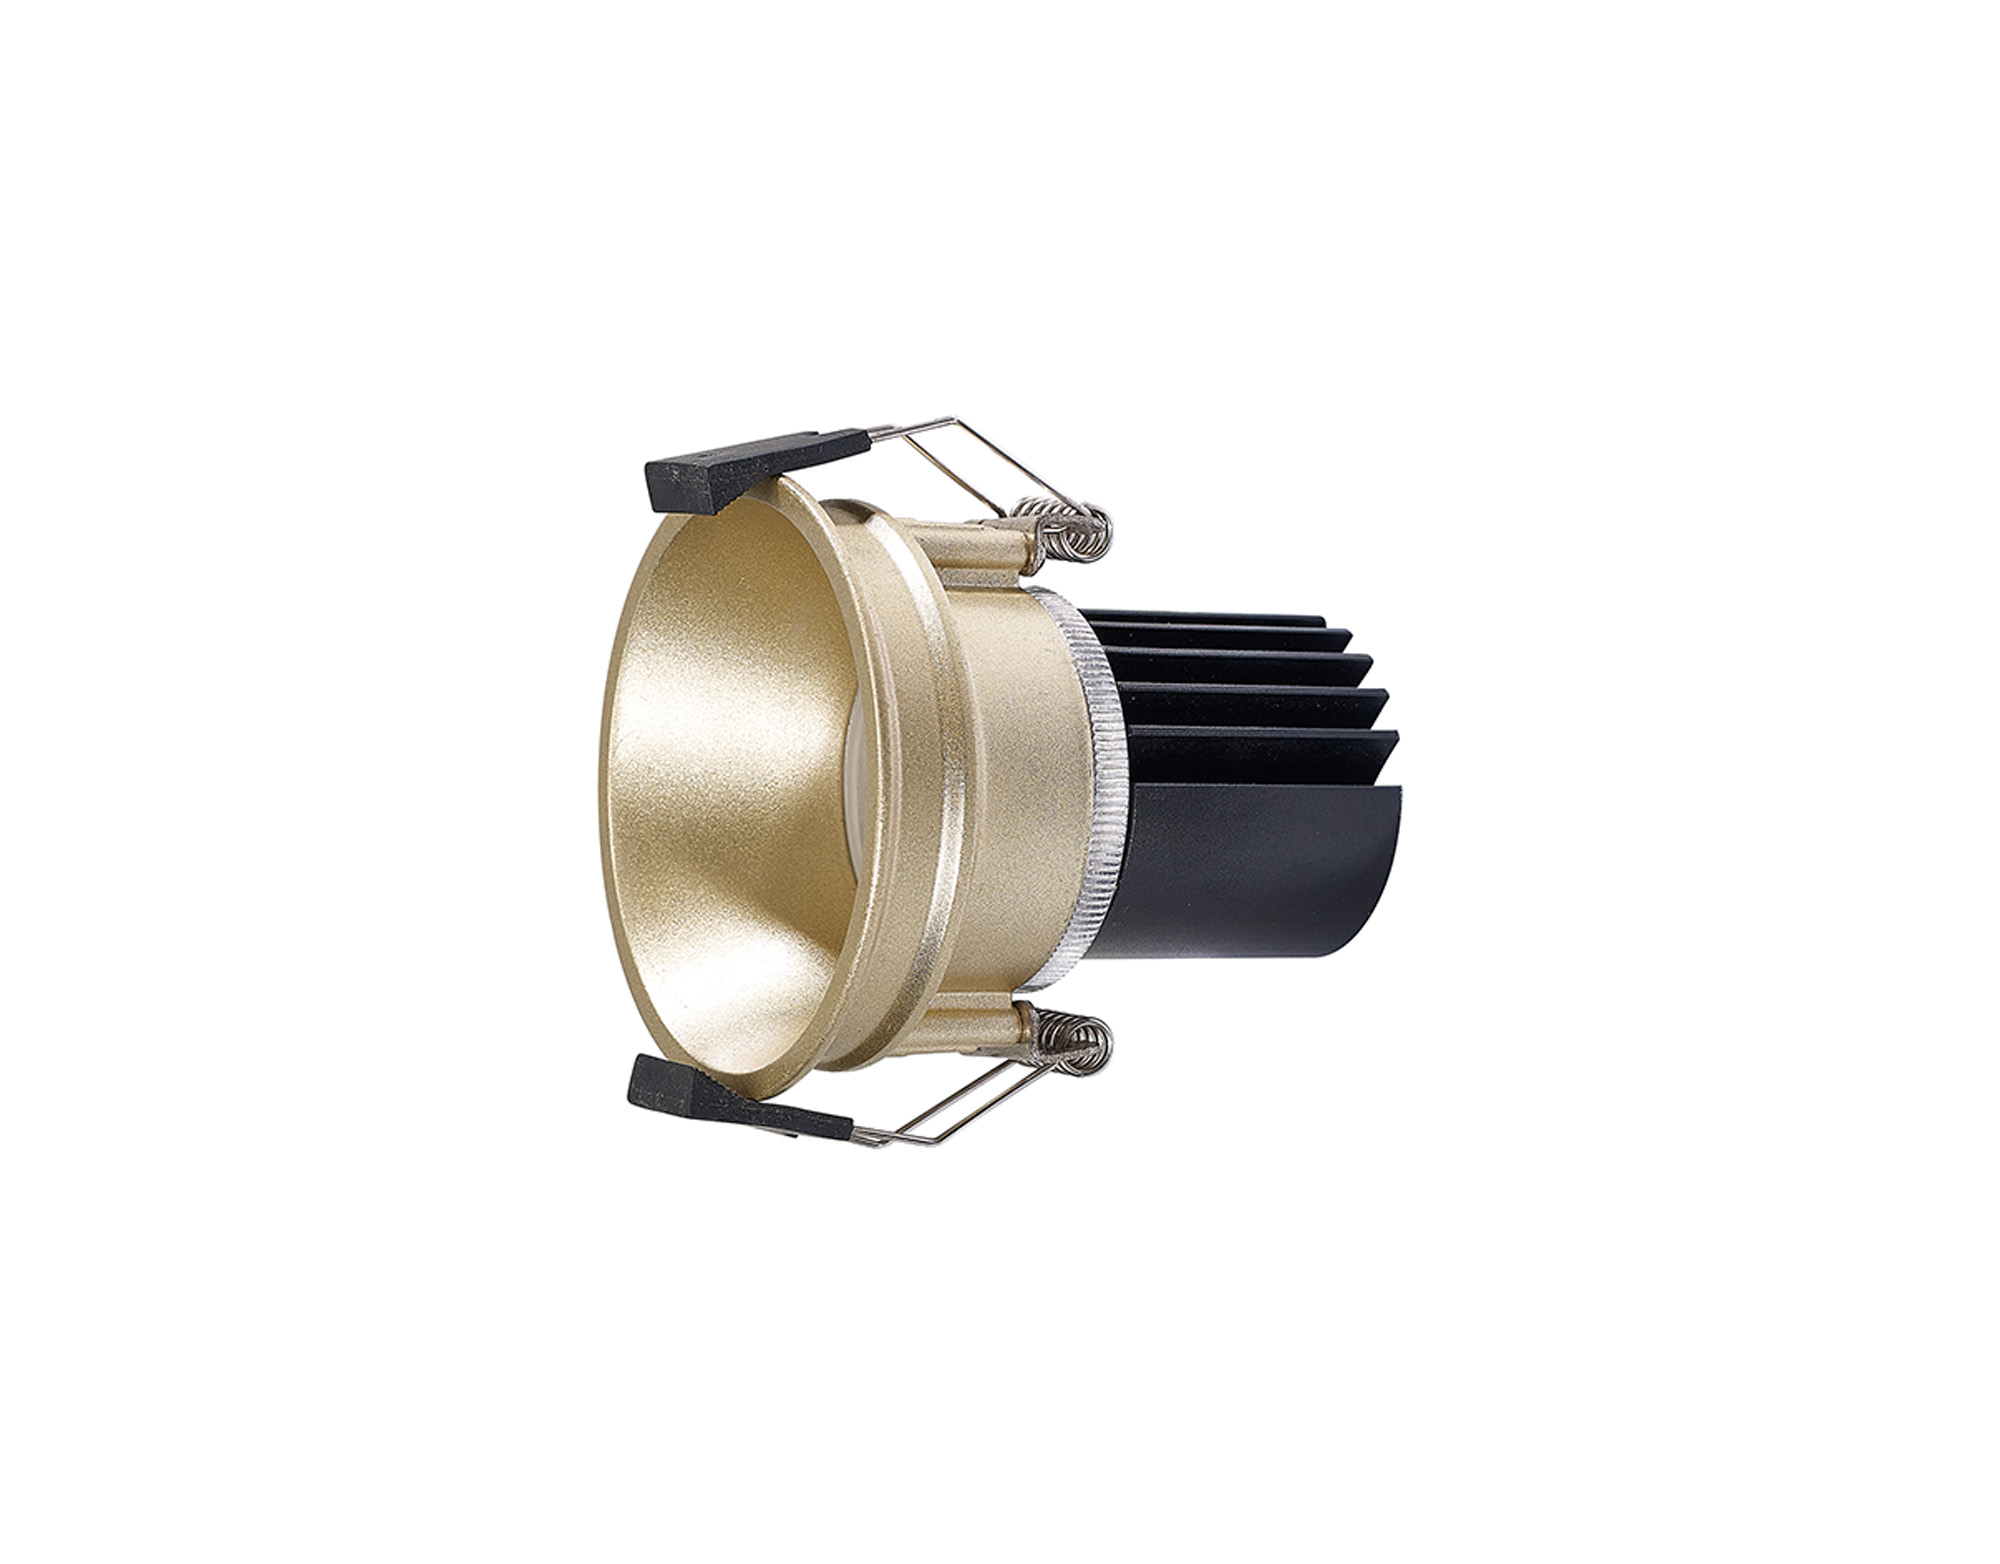 DM201624  Bania 8S 8W ;180mA 480lm 3000K 60° LED Engine; Gold IP20 Fixed Recessed Spotlight ; 5yrs Warranty